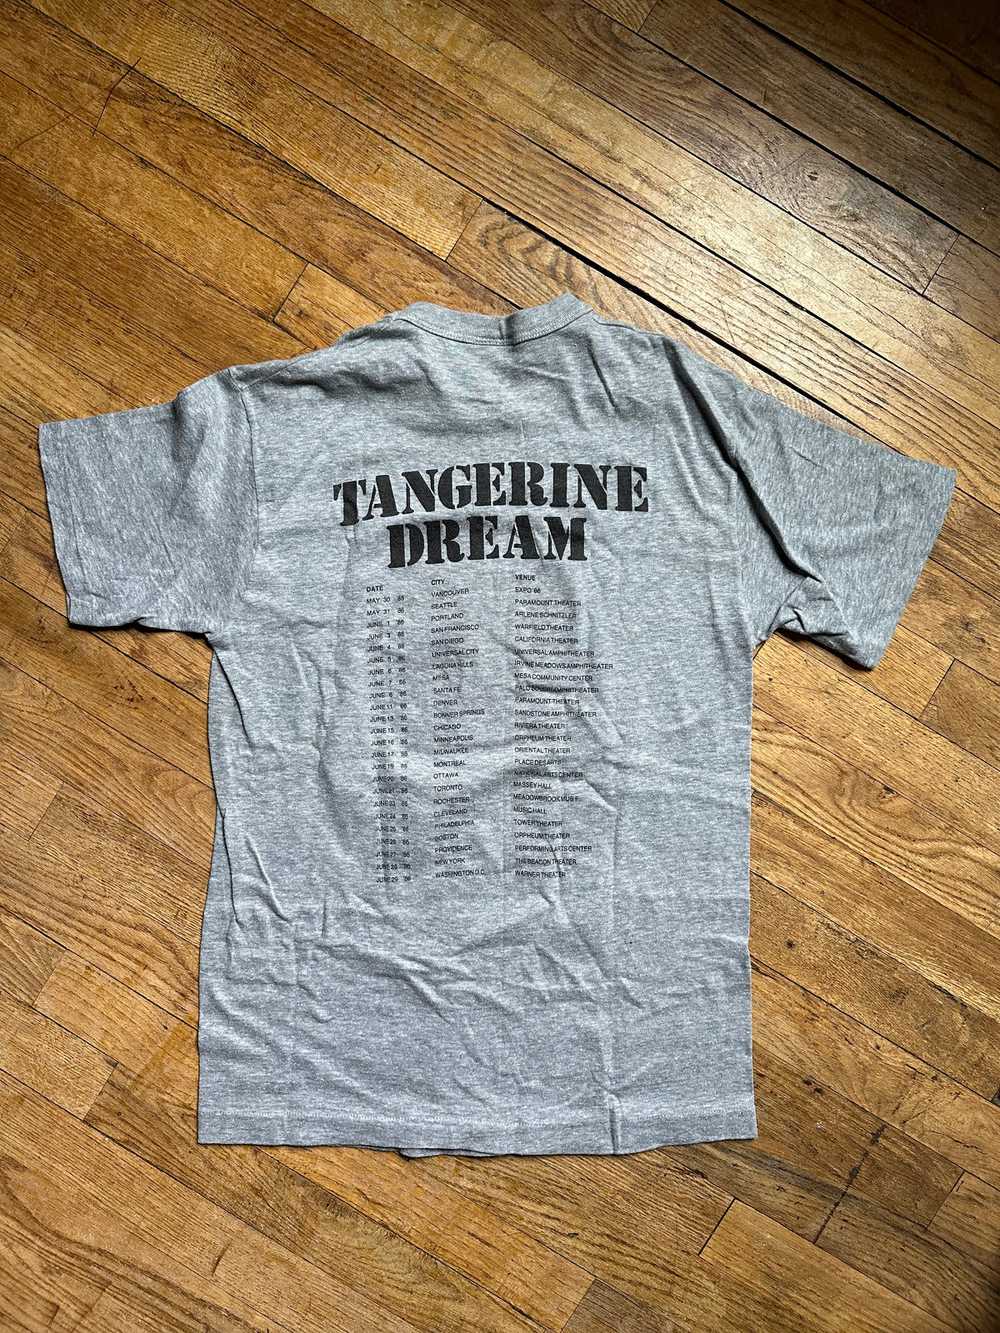 1986 Tangerine Dream Tour Tee - image 2